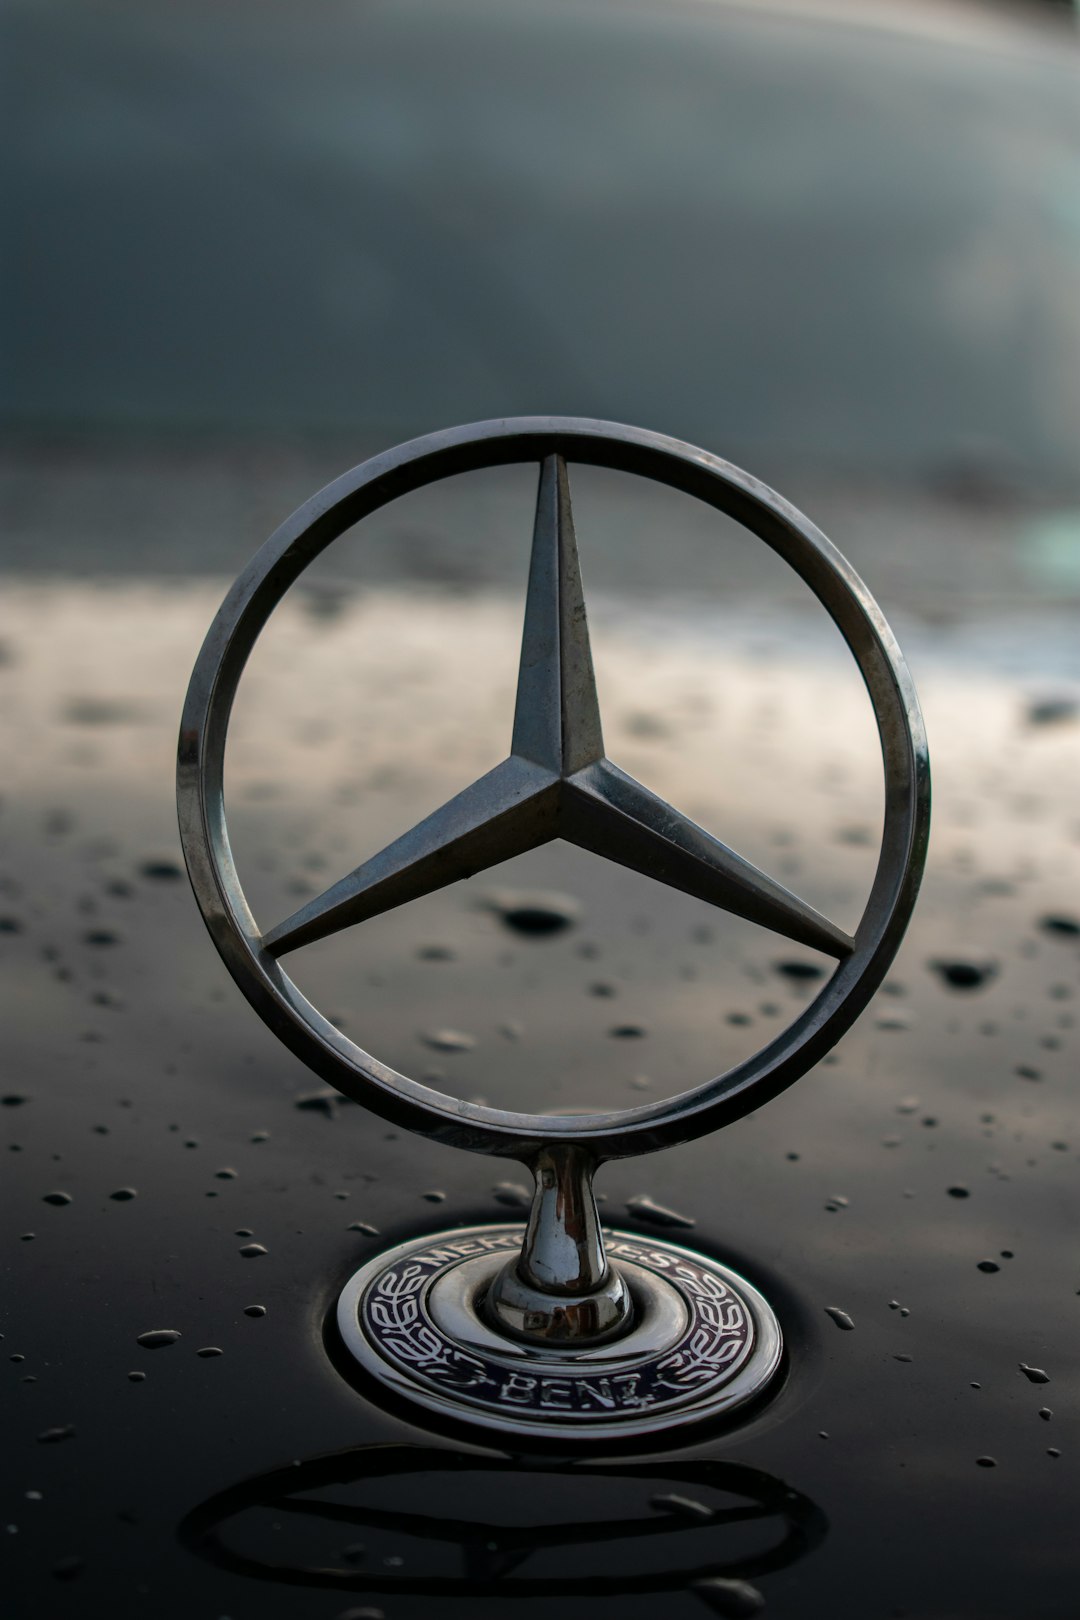 The Mercedes-Benz Mercedes-AMG GLC is a high-performance luxury SUV.